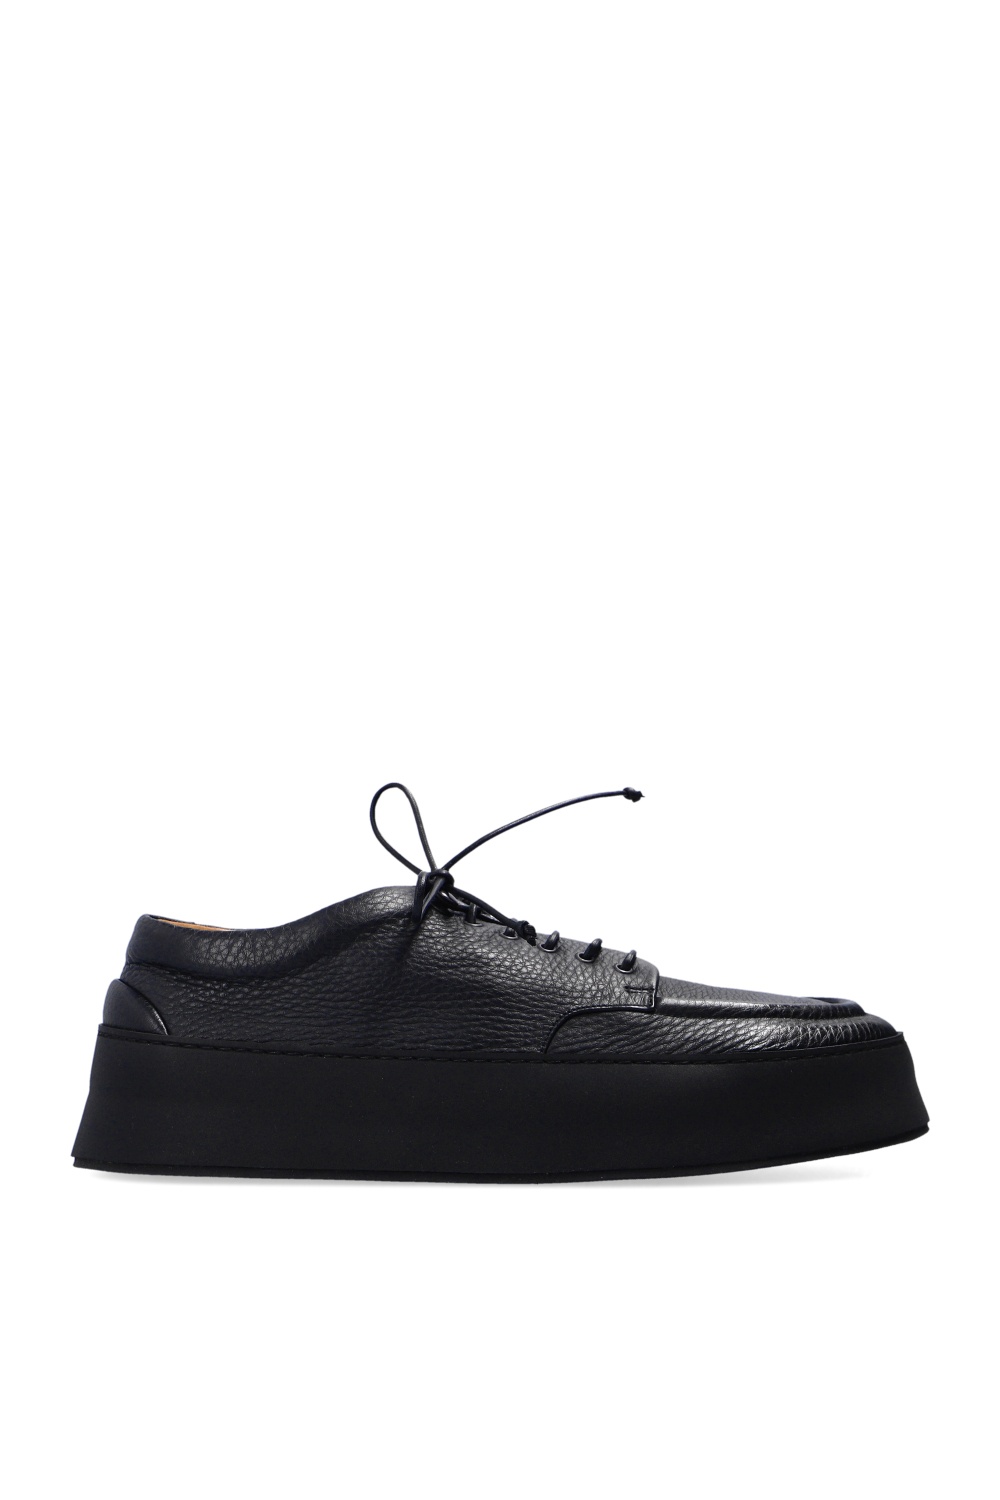 Marsell ‘Cassapana’ platform derby shoes